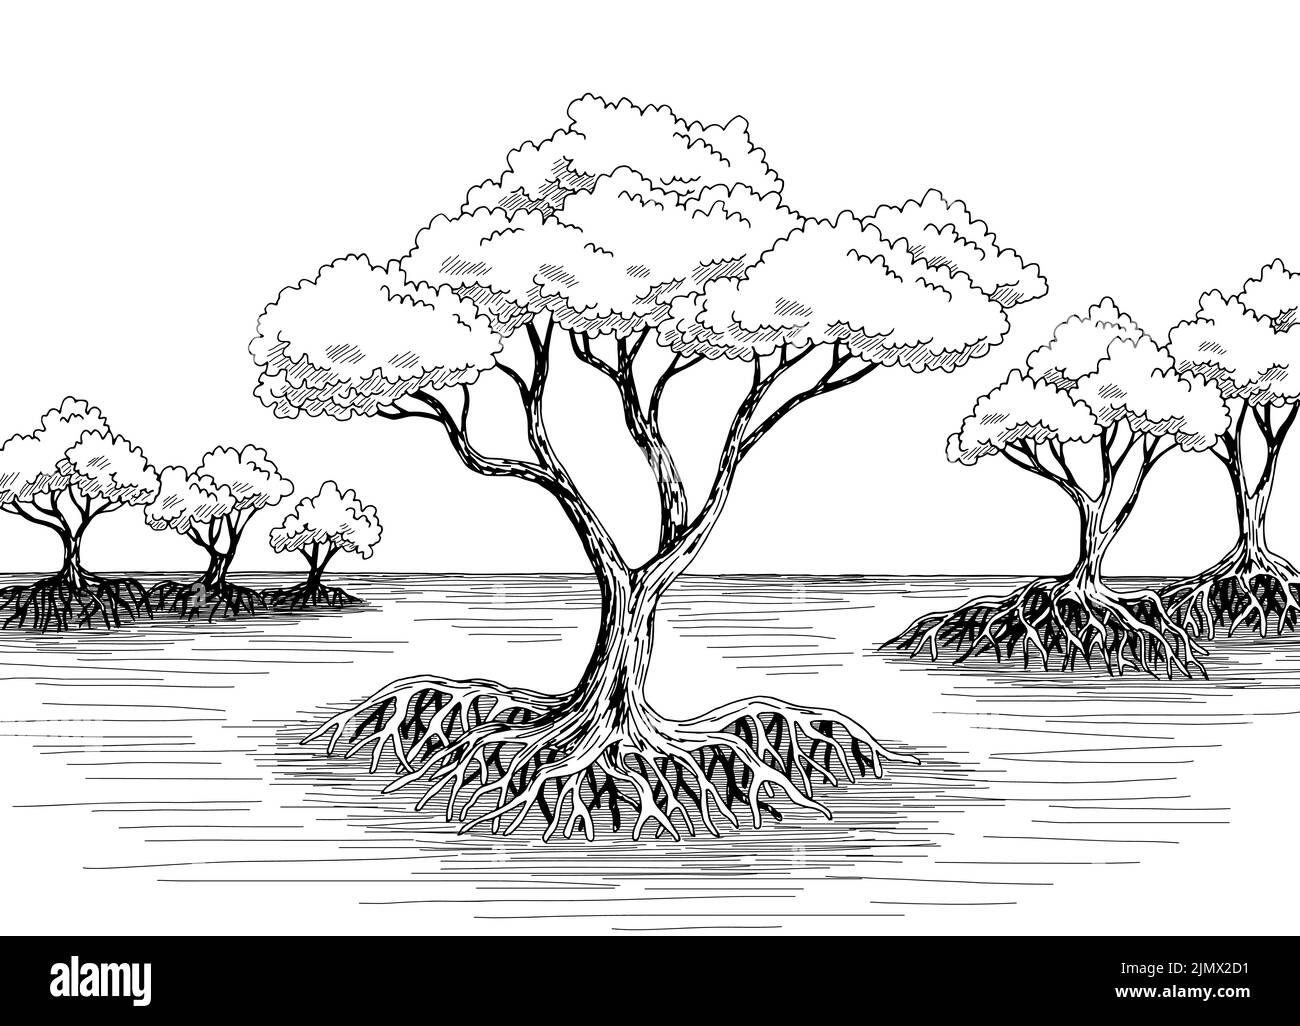 Mangroven Dschungel Wald Fluss Grafik schwarz weiß Landschaft Skizze Illustration Vektor Stock Vektor